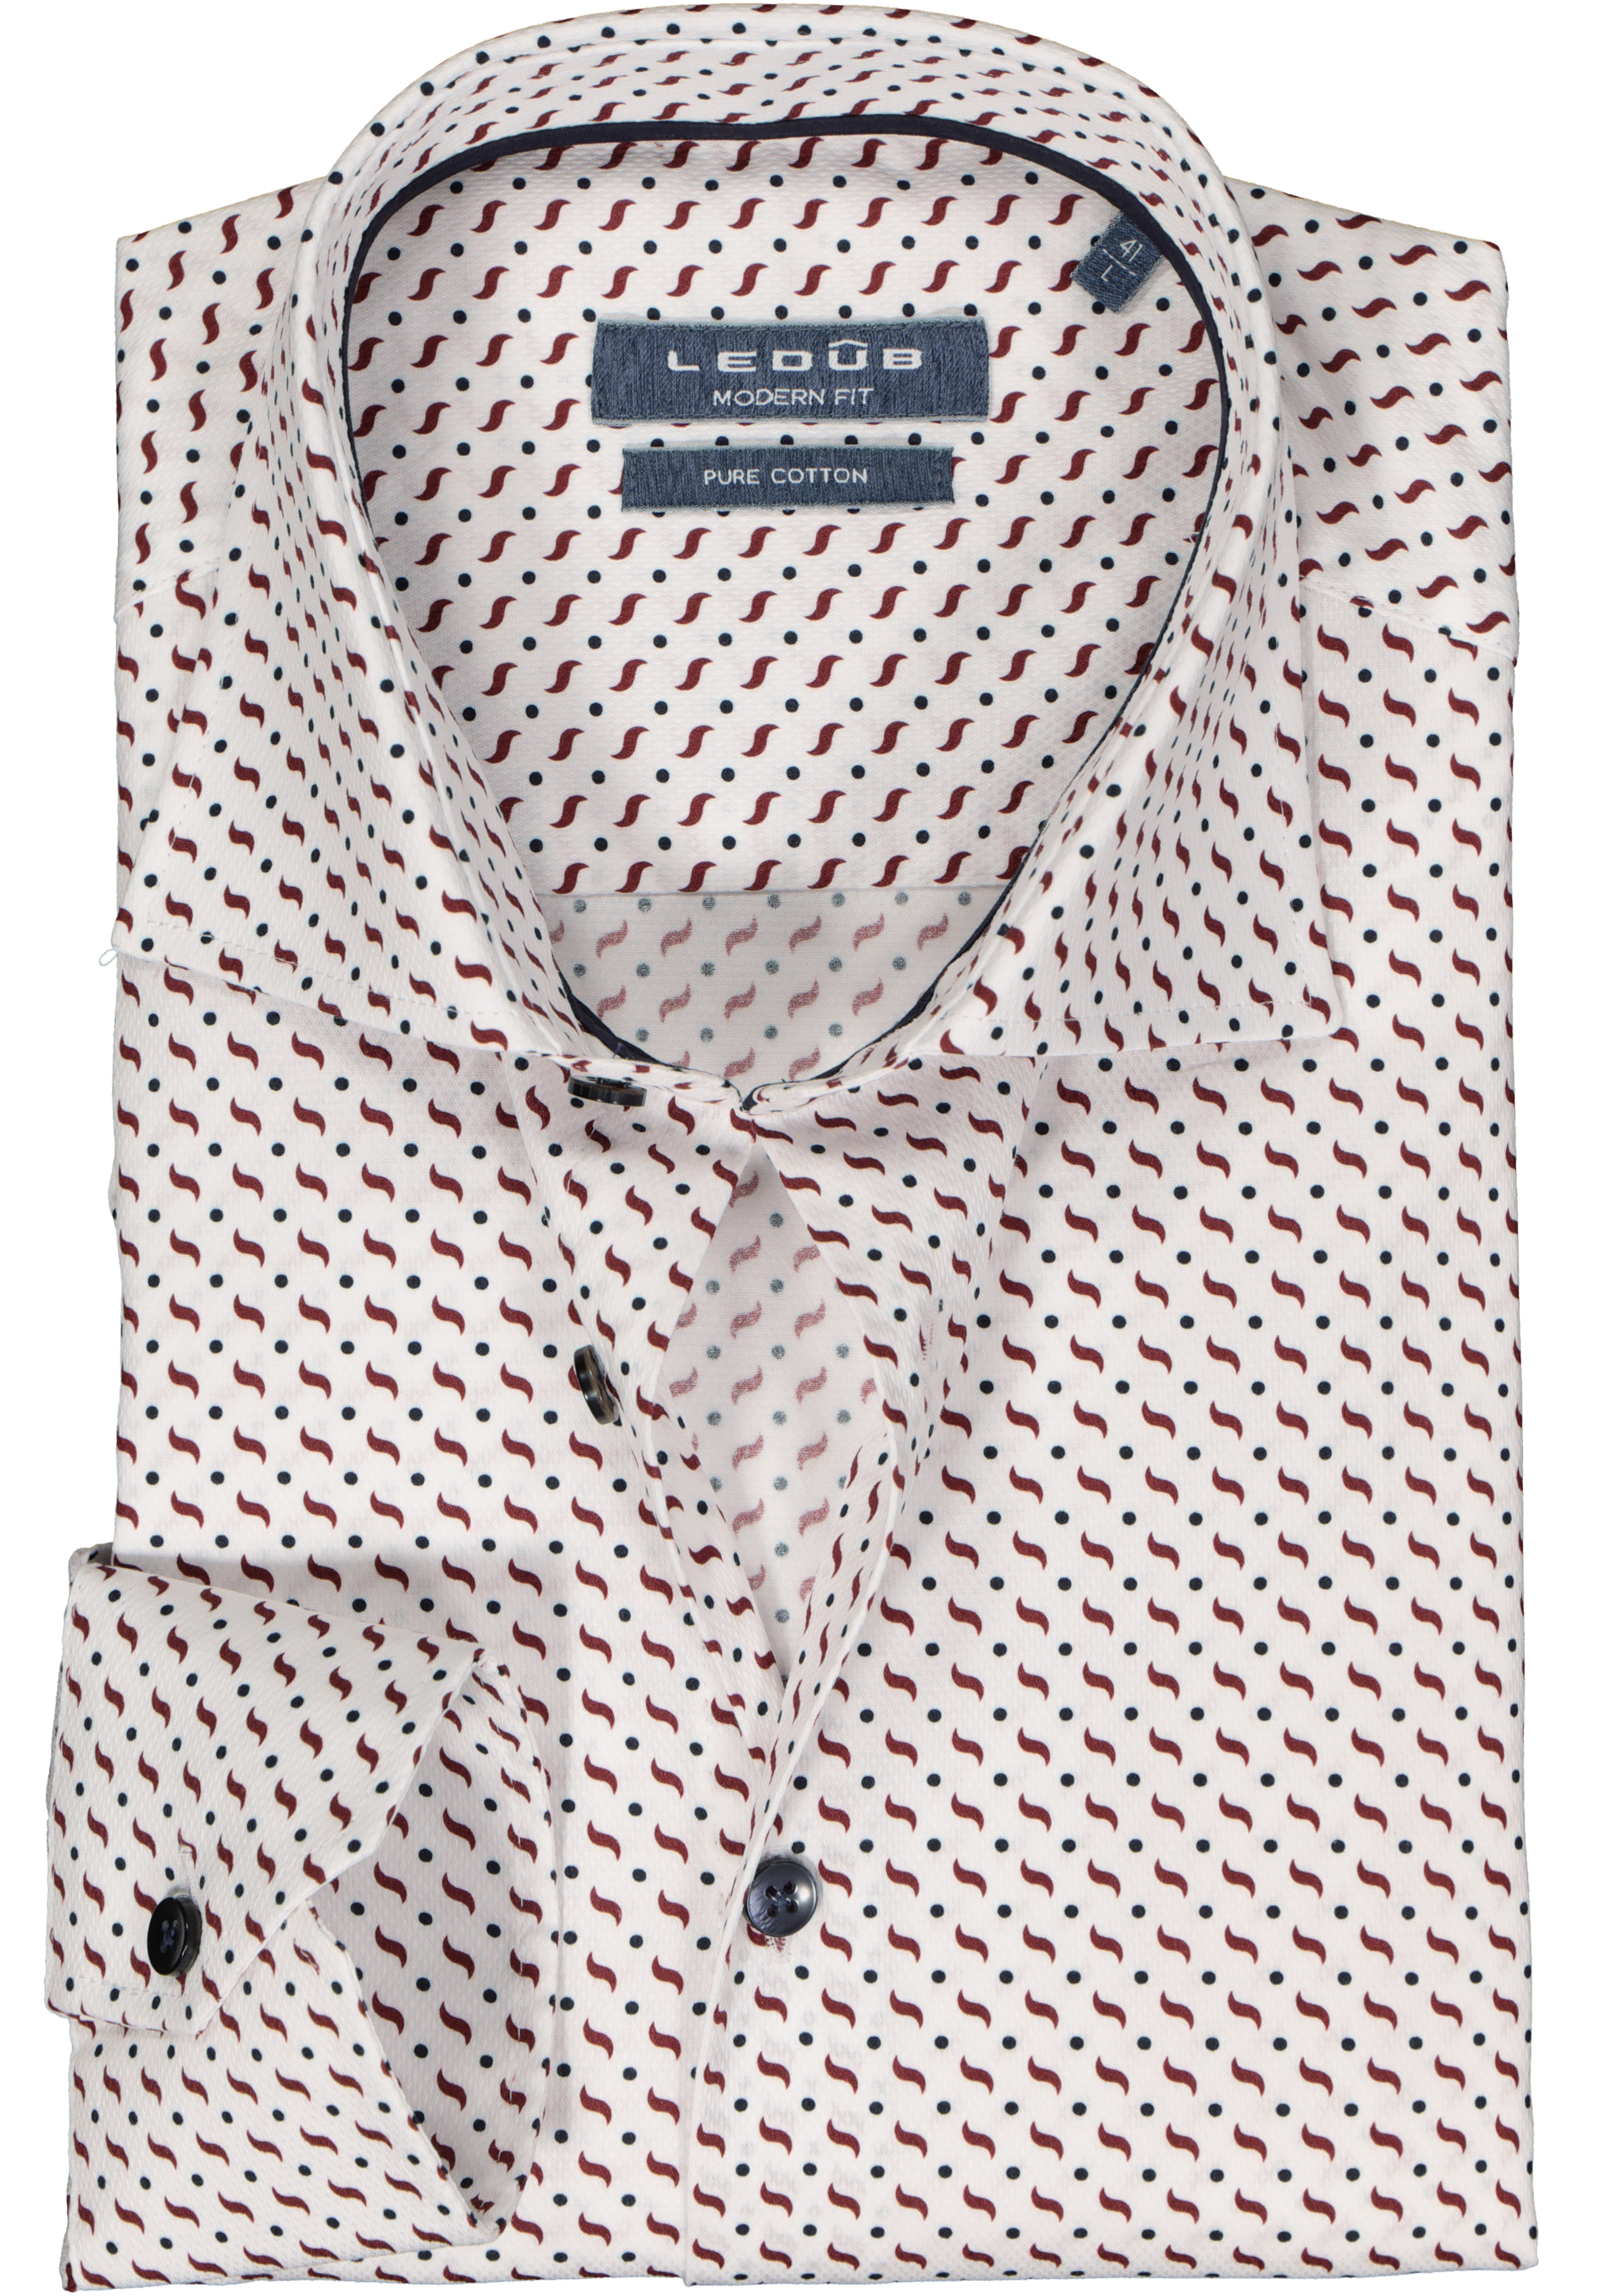 Ledub modern fit overhemd, wit met blauw en rood dessin